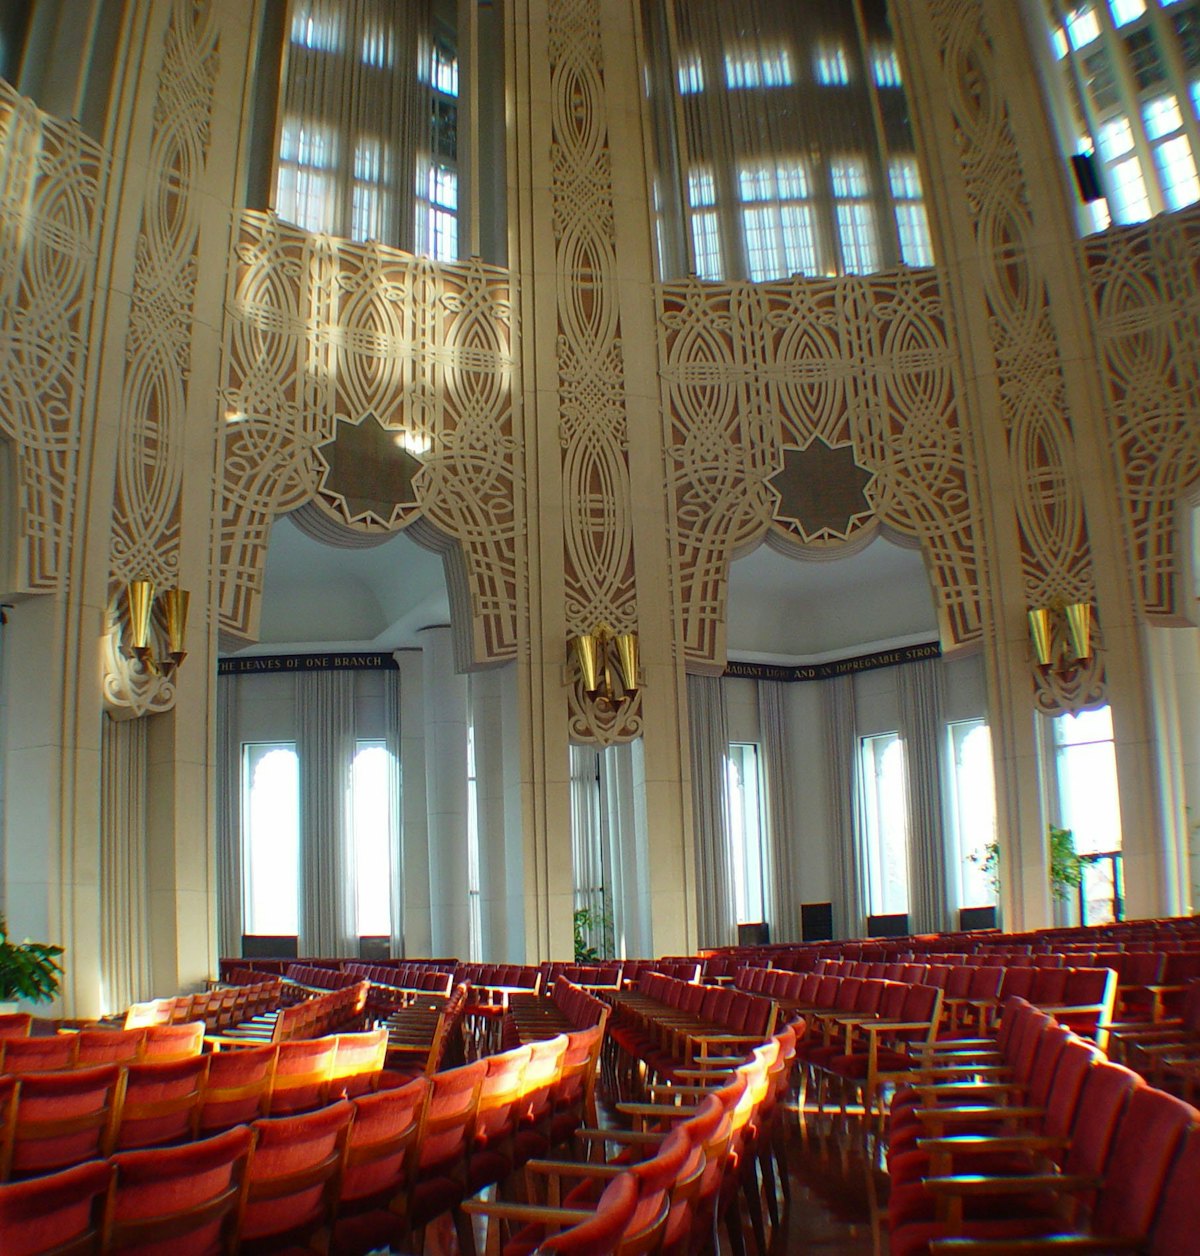 Light plays on the lacy interior of the Baha'i Temple. (Photo: Vladimir Shilov)